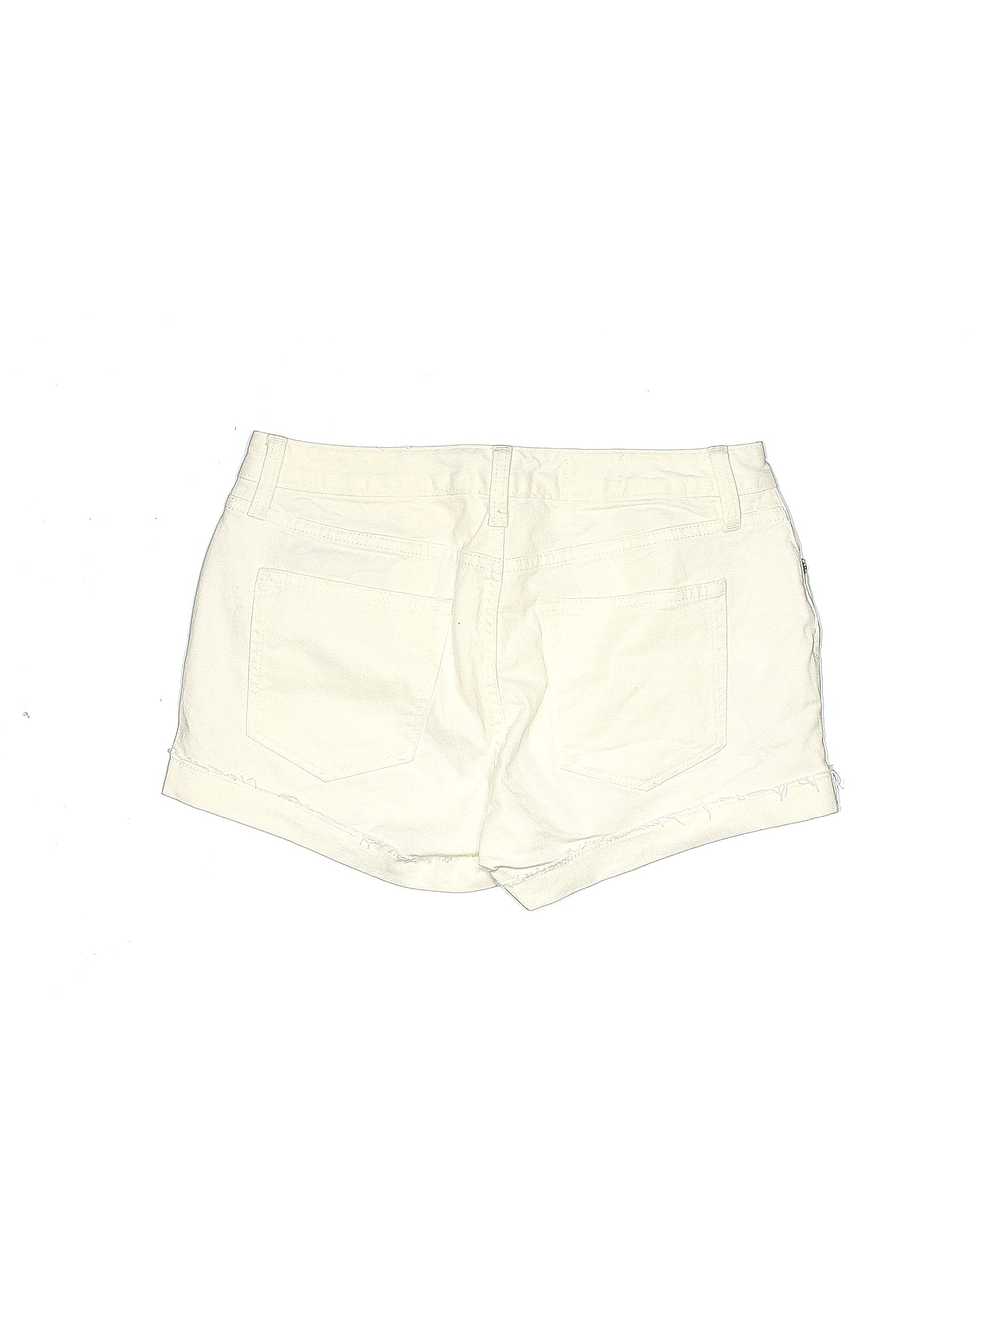 Gap Women Ivory Denim Shorts 27W - image 2